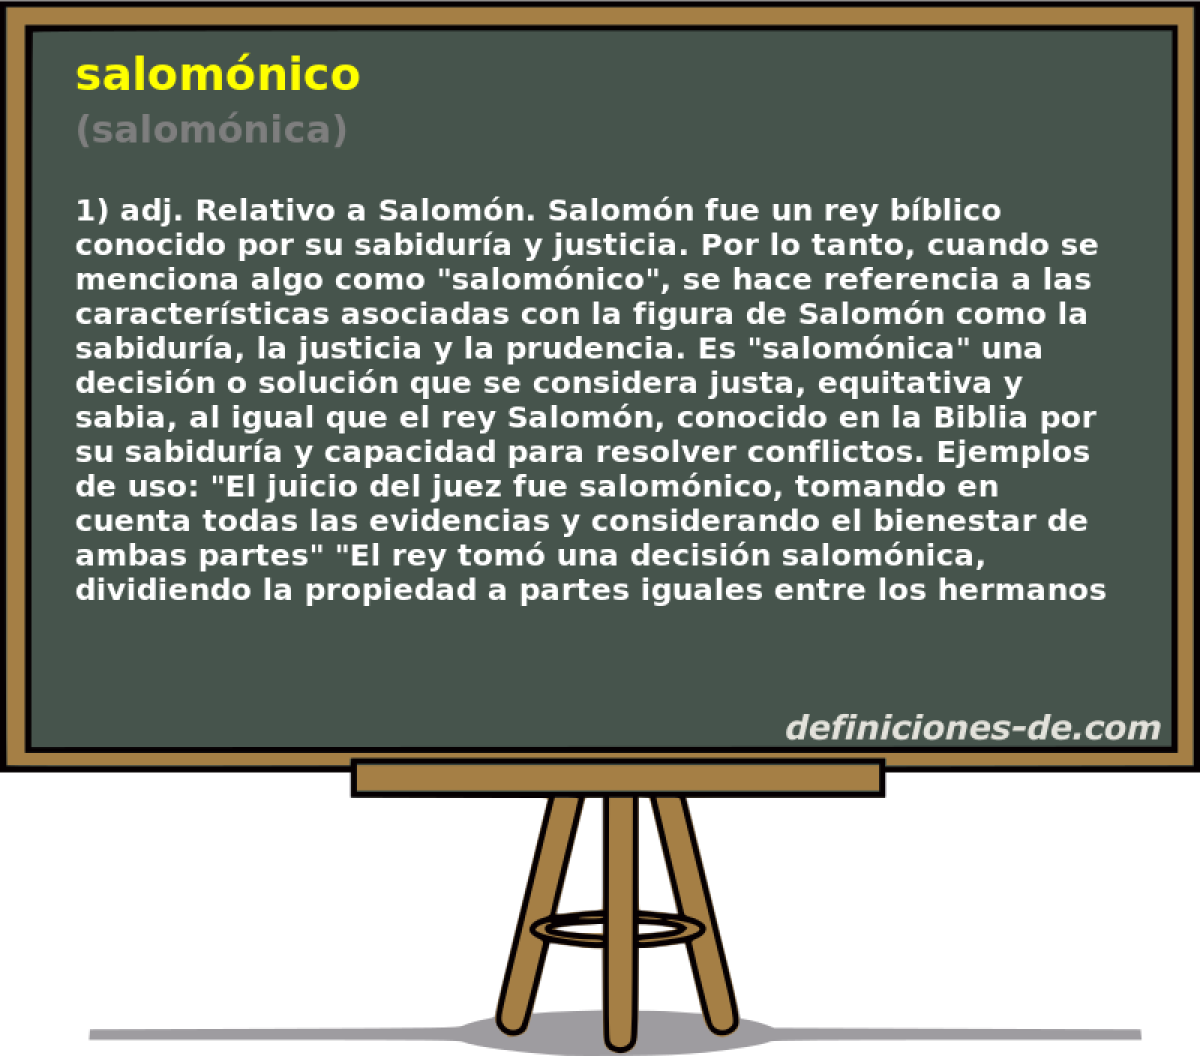 salomnico (salomnica)